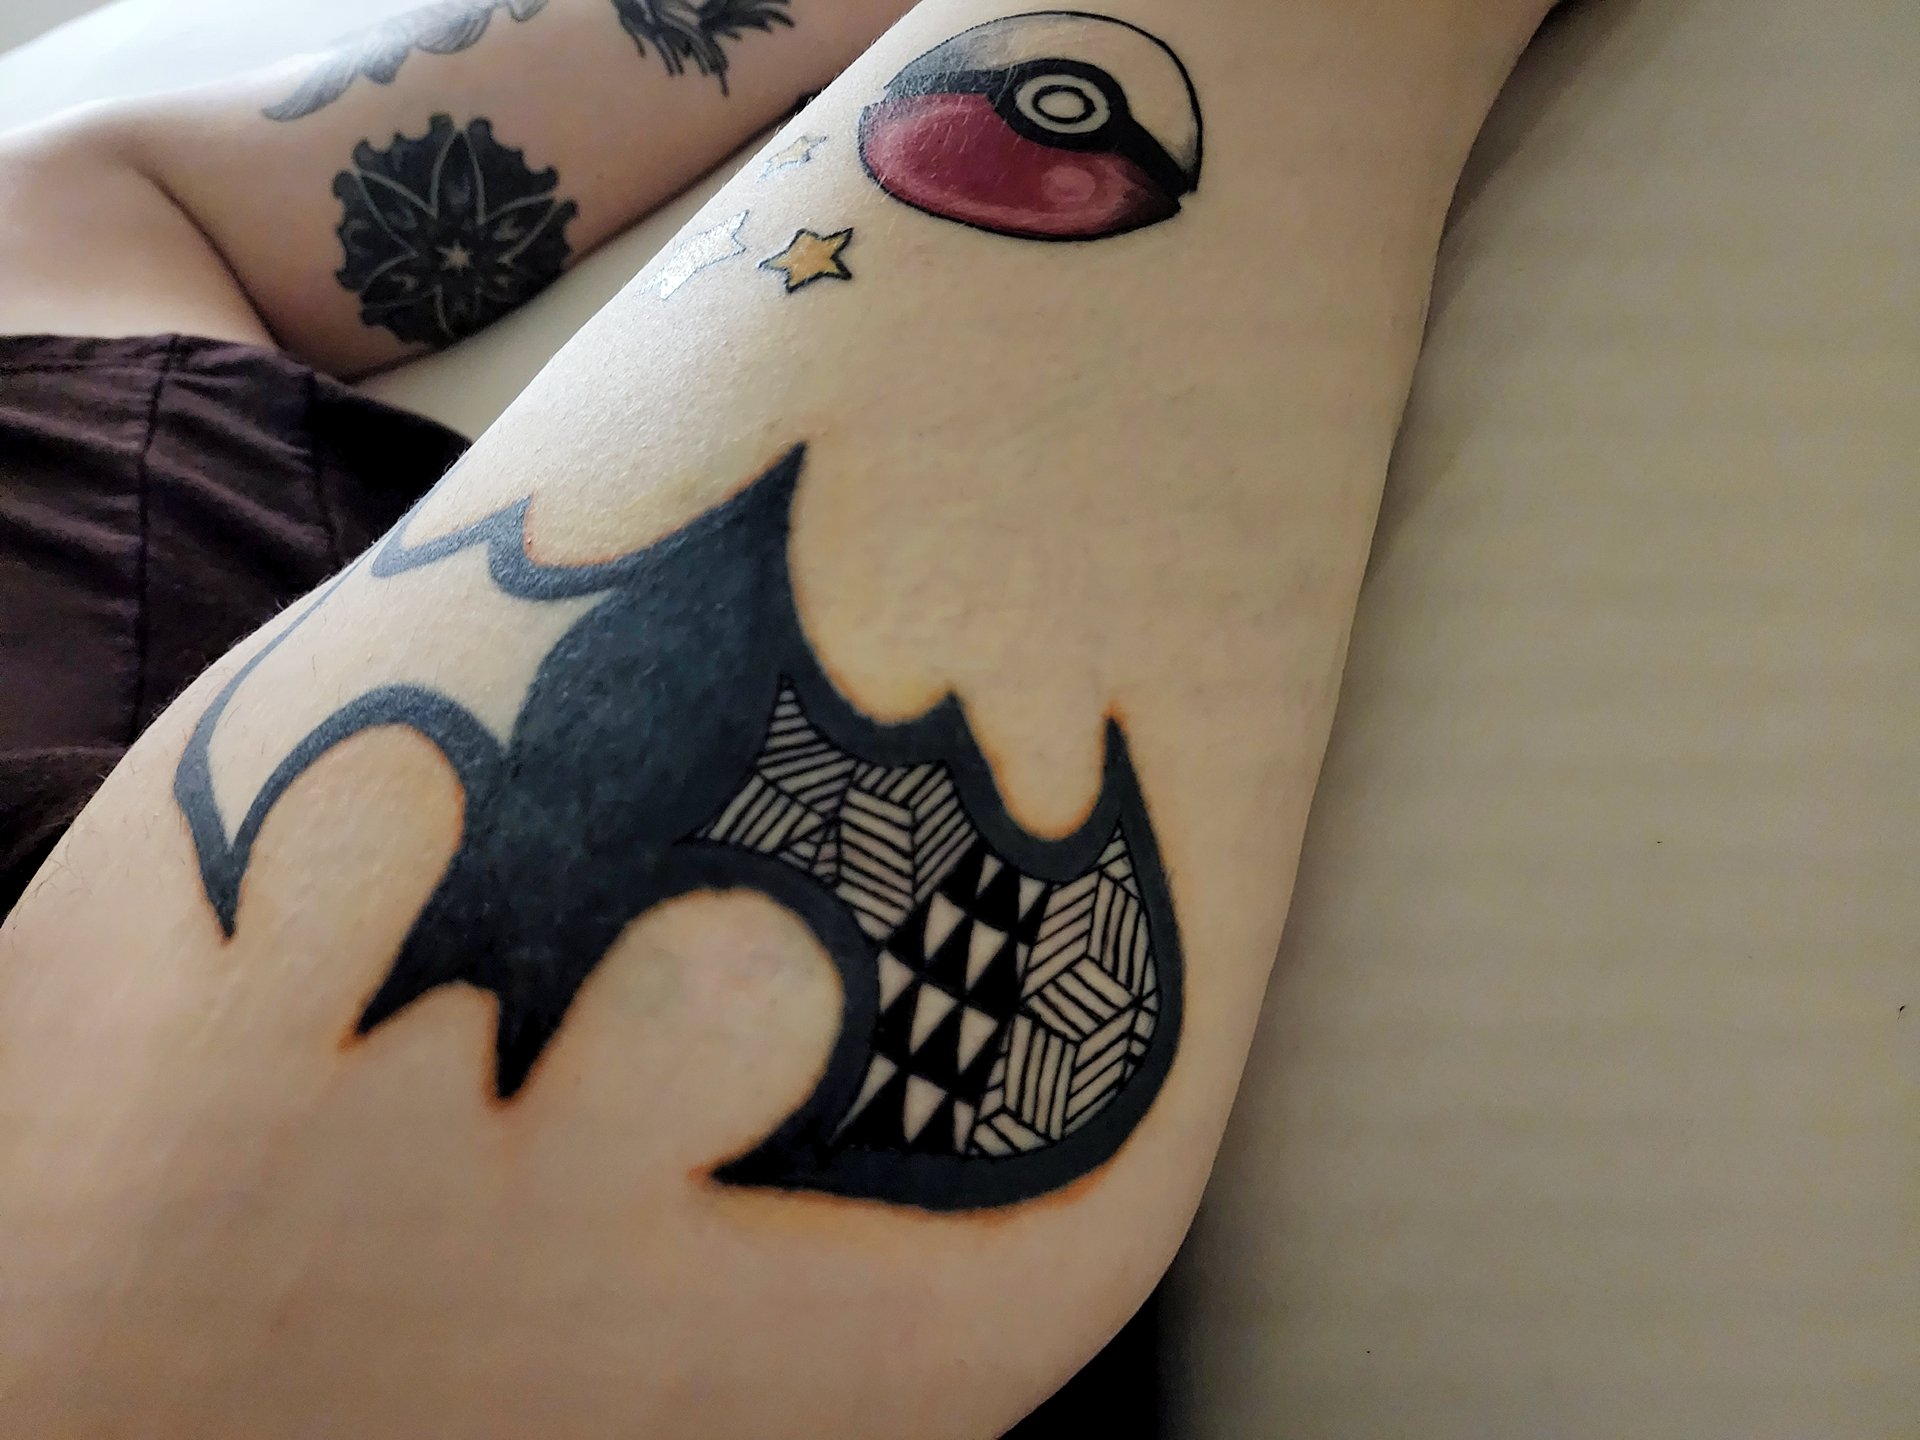 Batman Symbol Tattoo by MollyArcAngelTattoo on DeviantArt